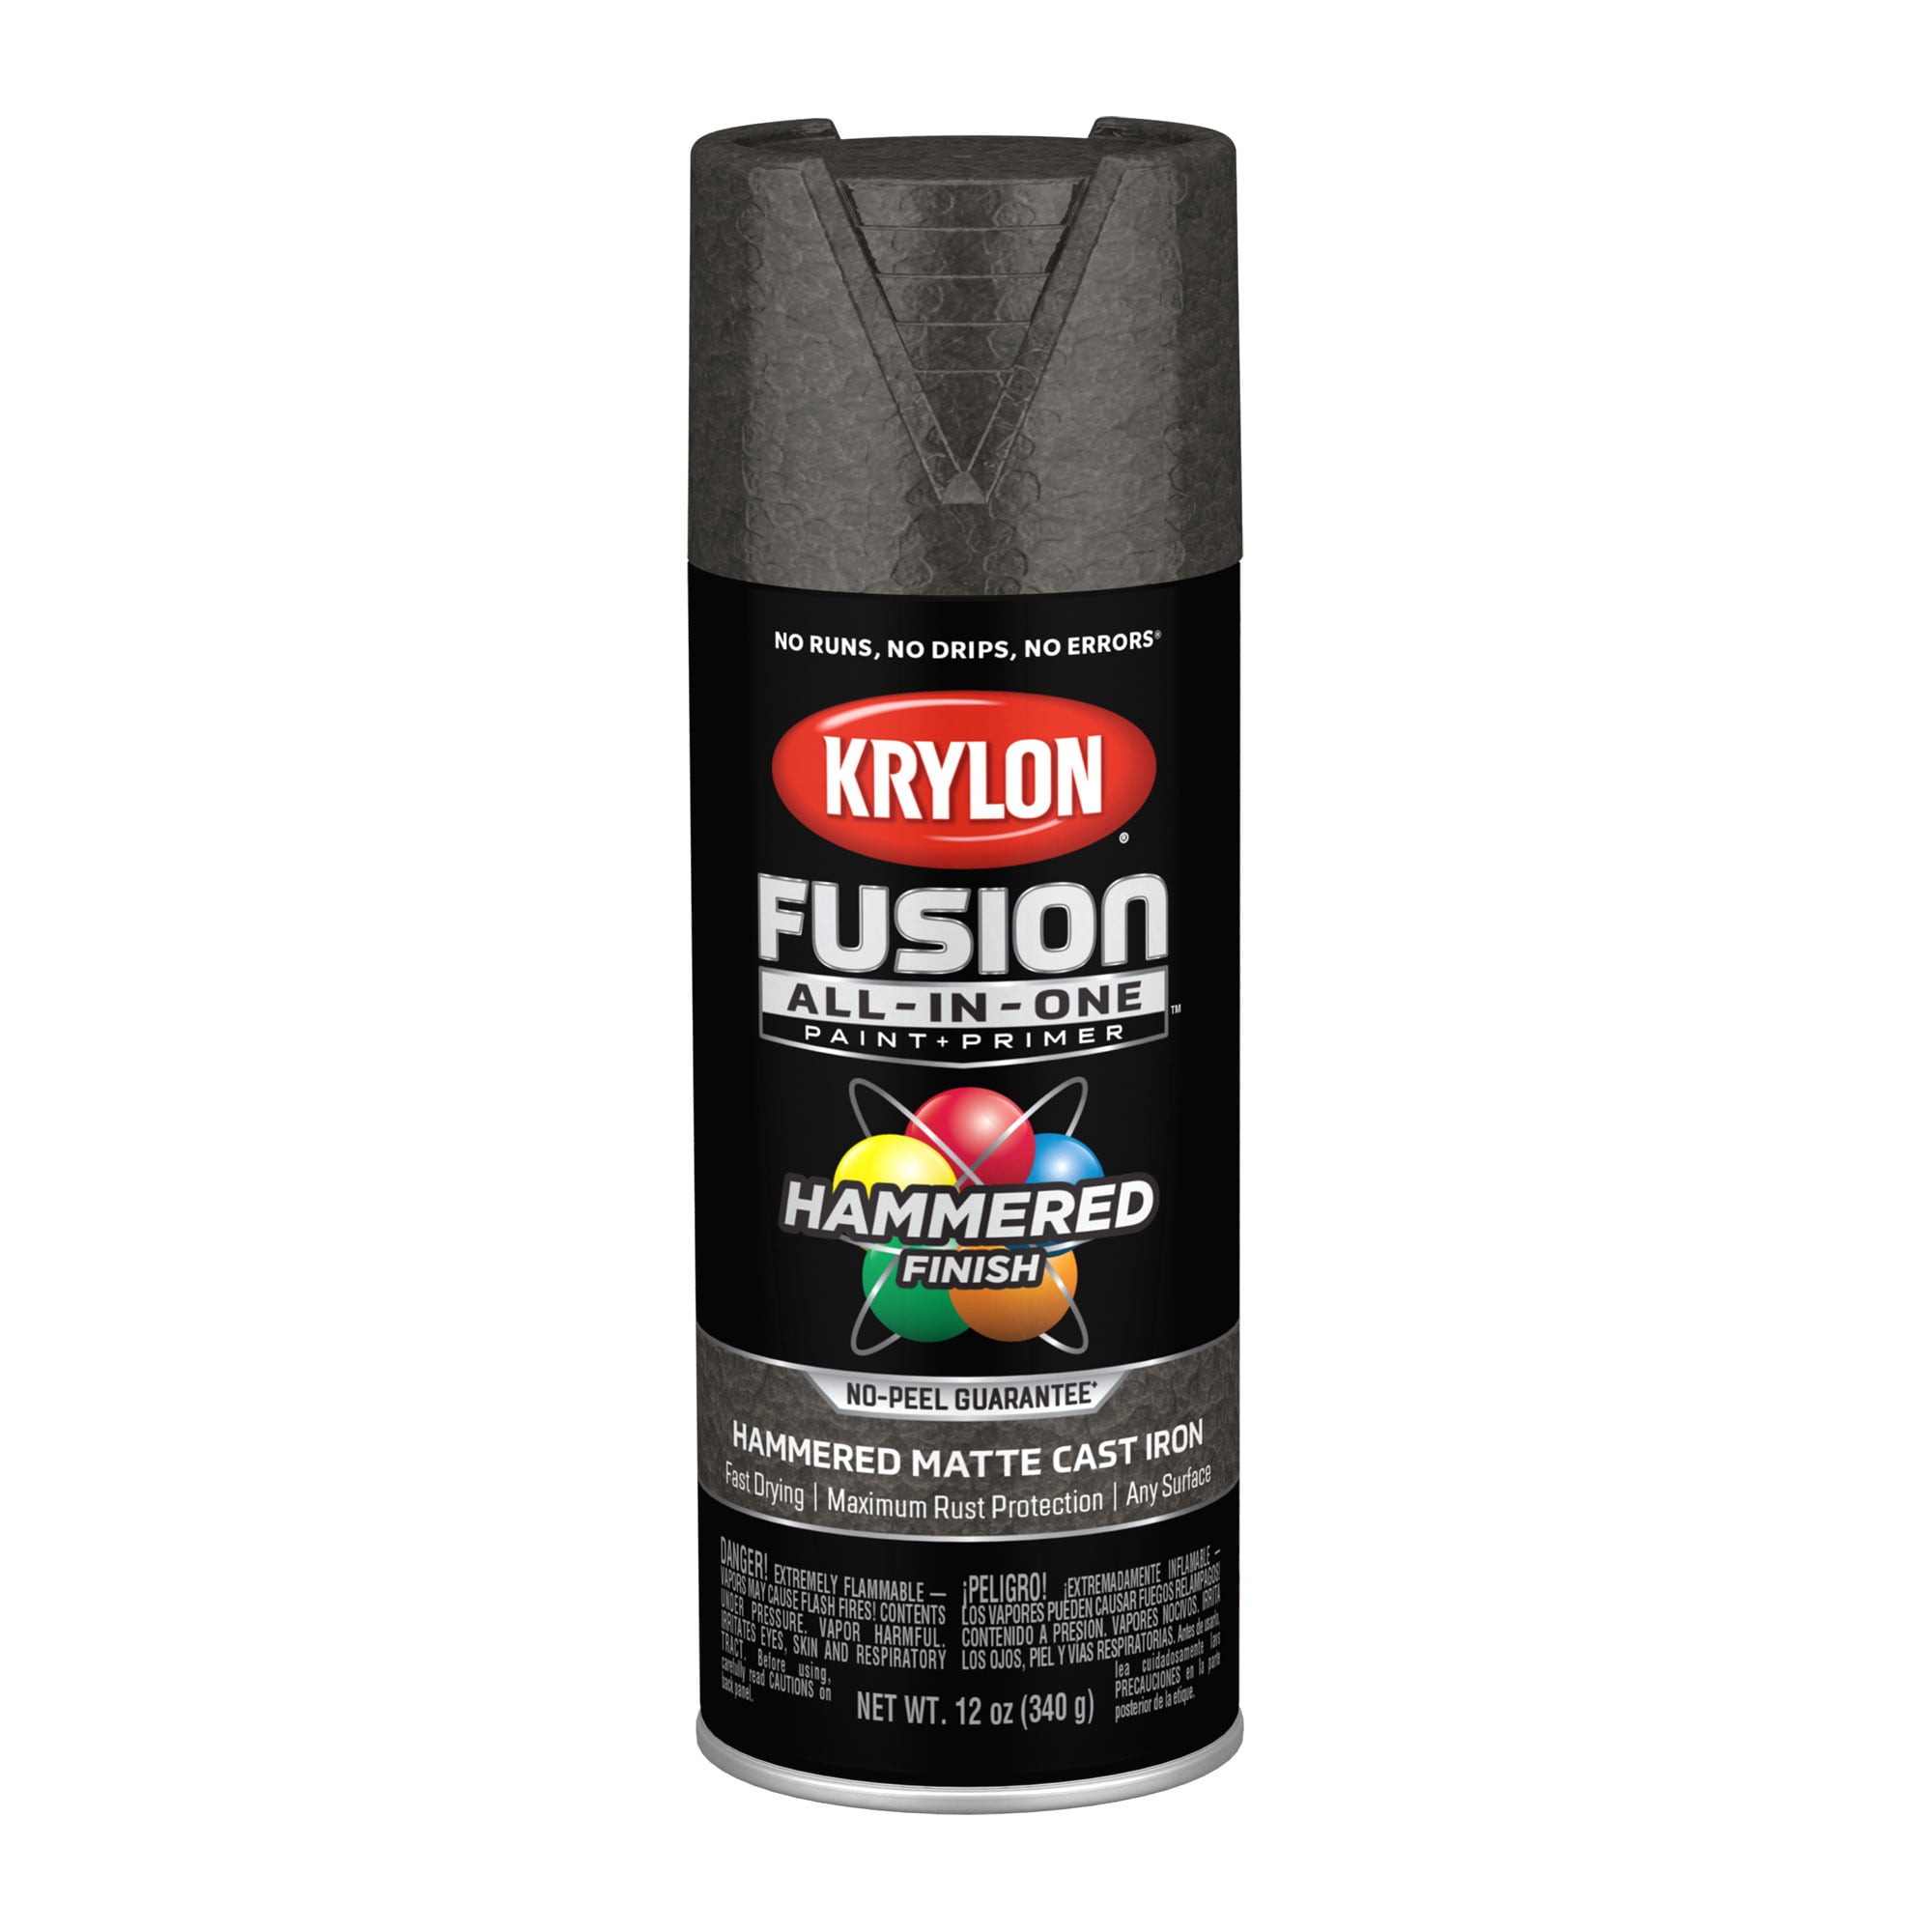 Krylon Industrial Coatings Iron Guard K110 Black Matte Acrylic Enamel Paint  - 1 gal Can - 65819